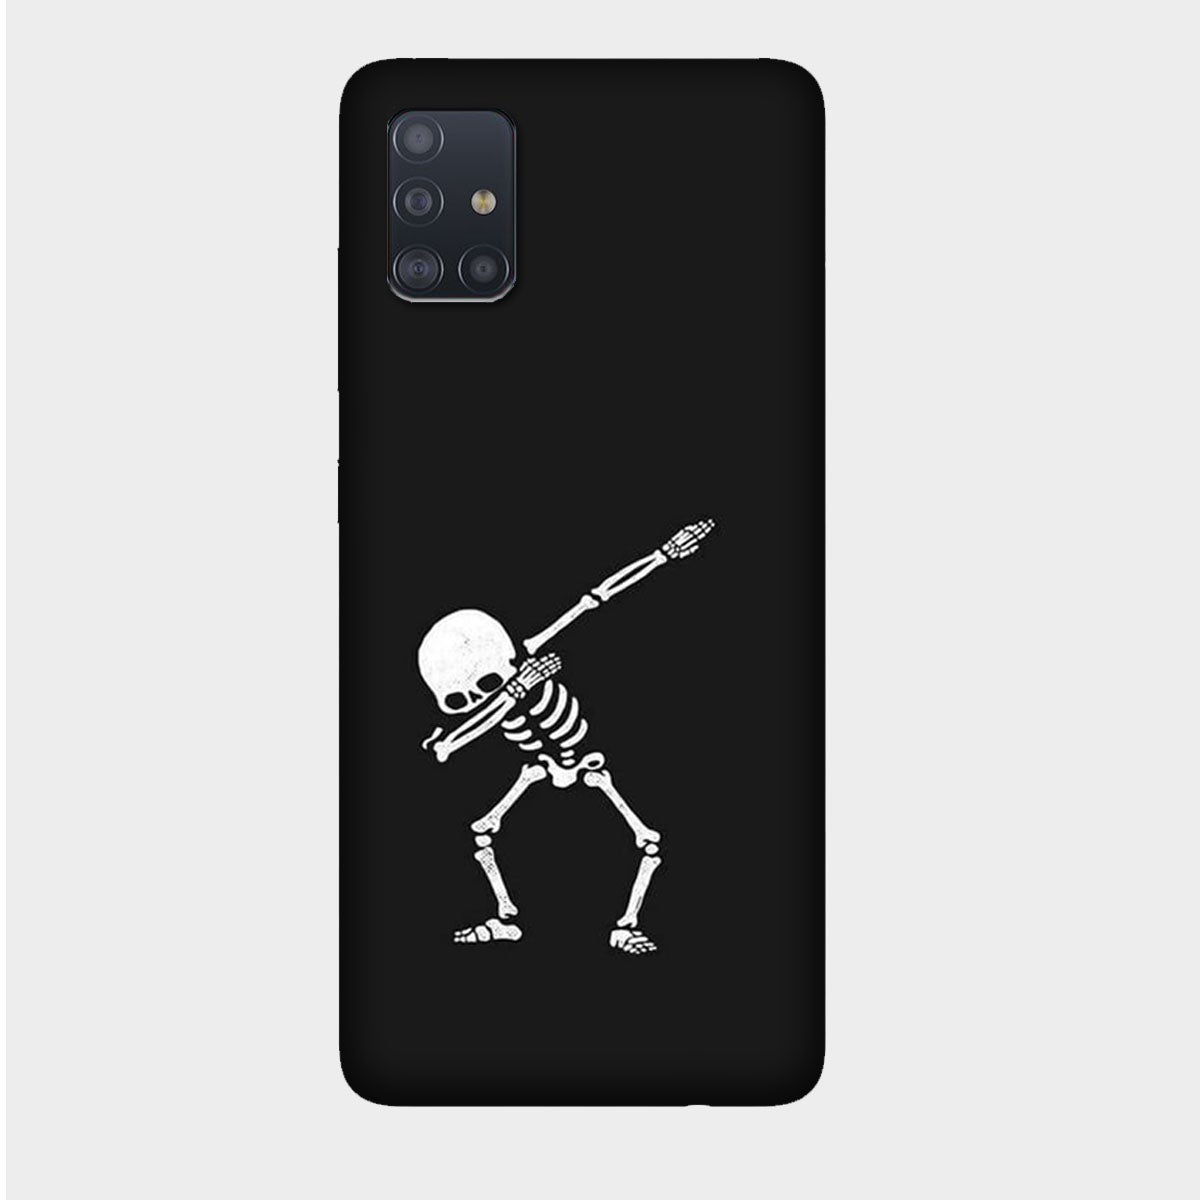 Skull Dab - Mobile Phone Cover - Hard Case - Samsung - Samsung